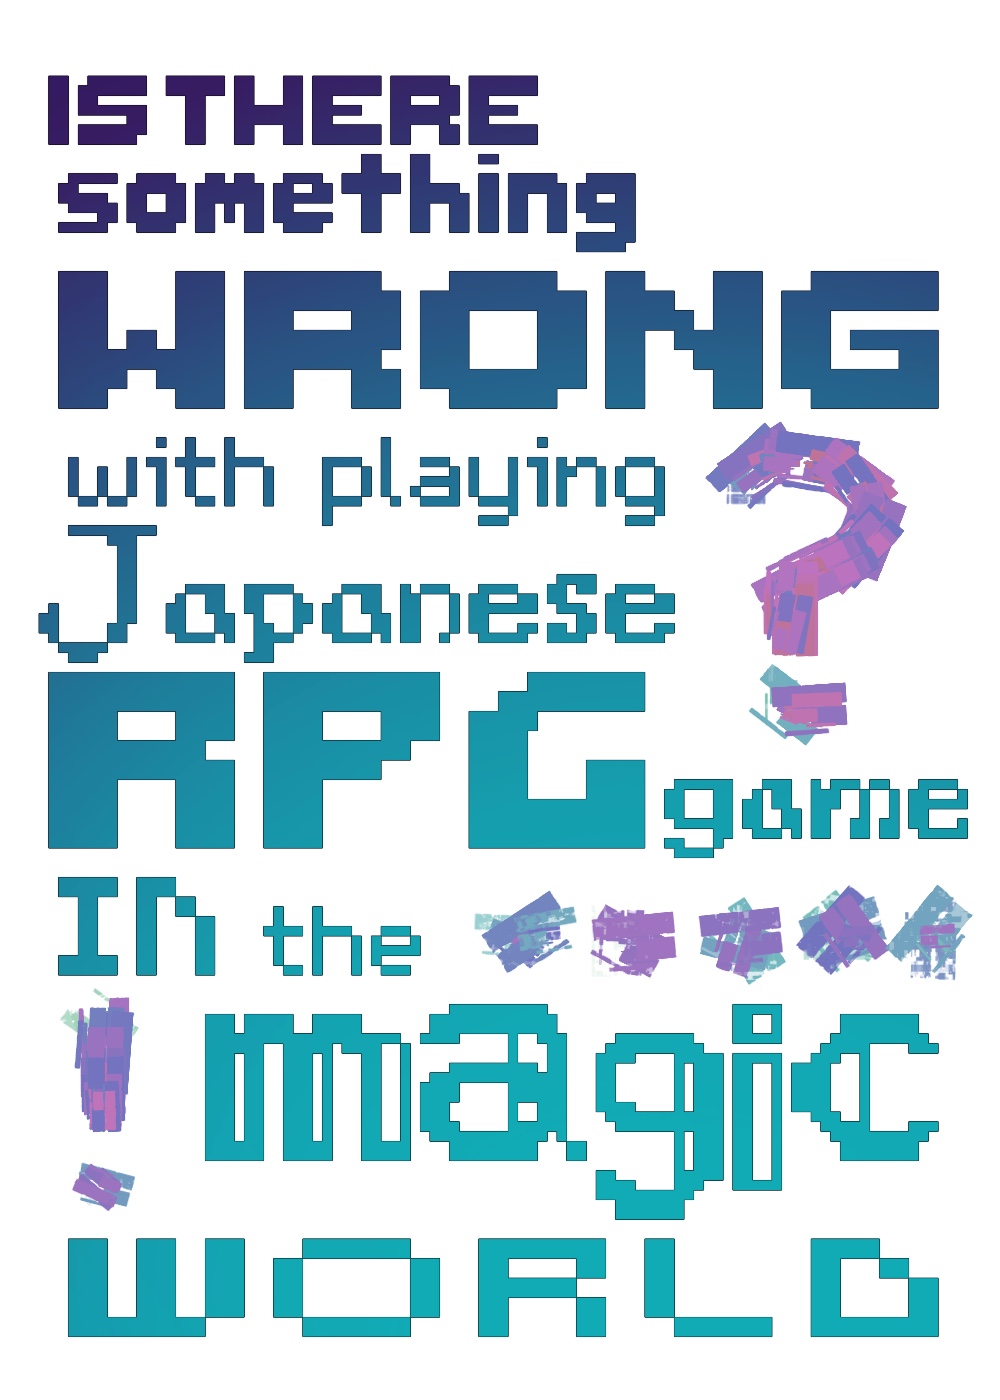 [HP]在魔法界玩日式rpg是否搞錯了什麼